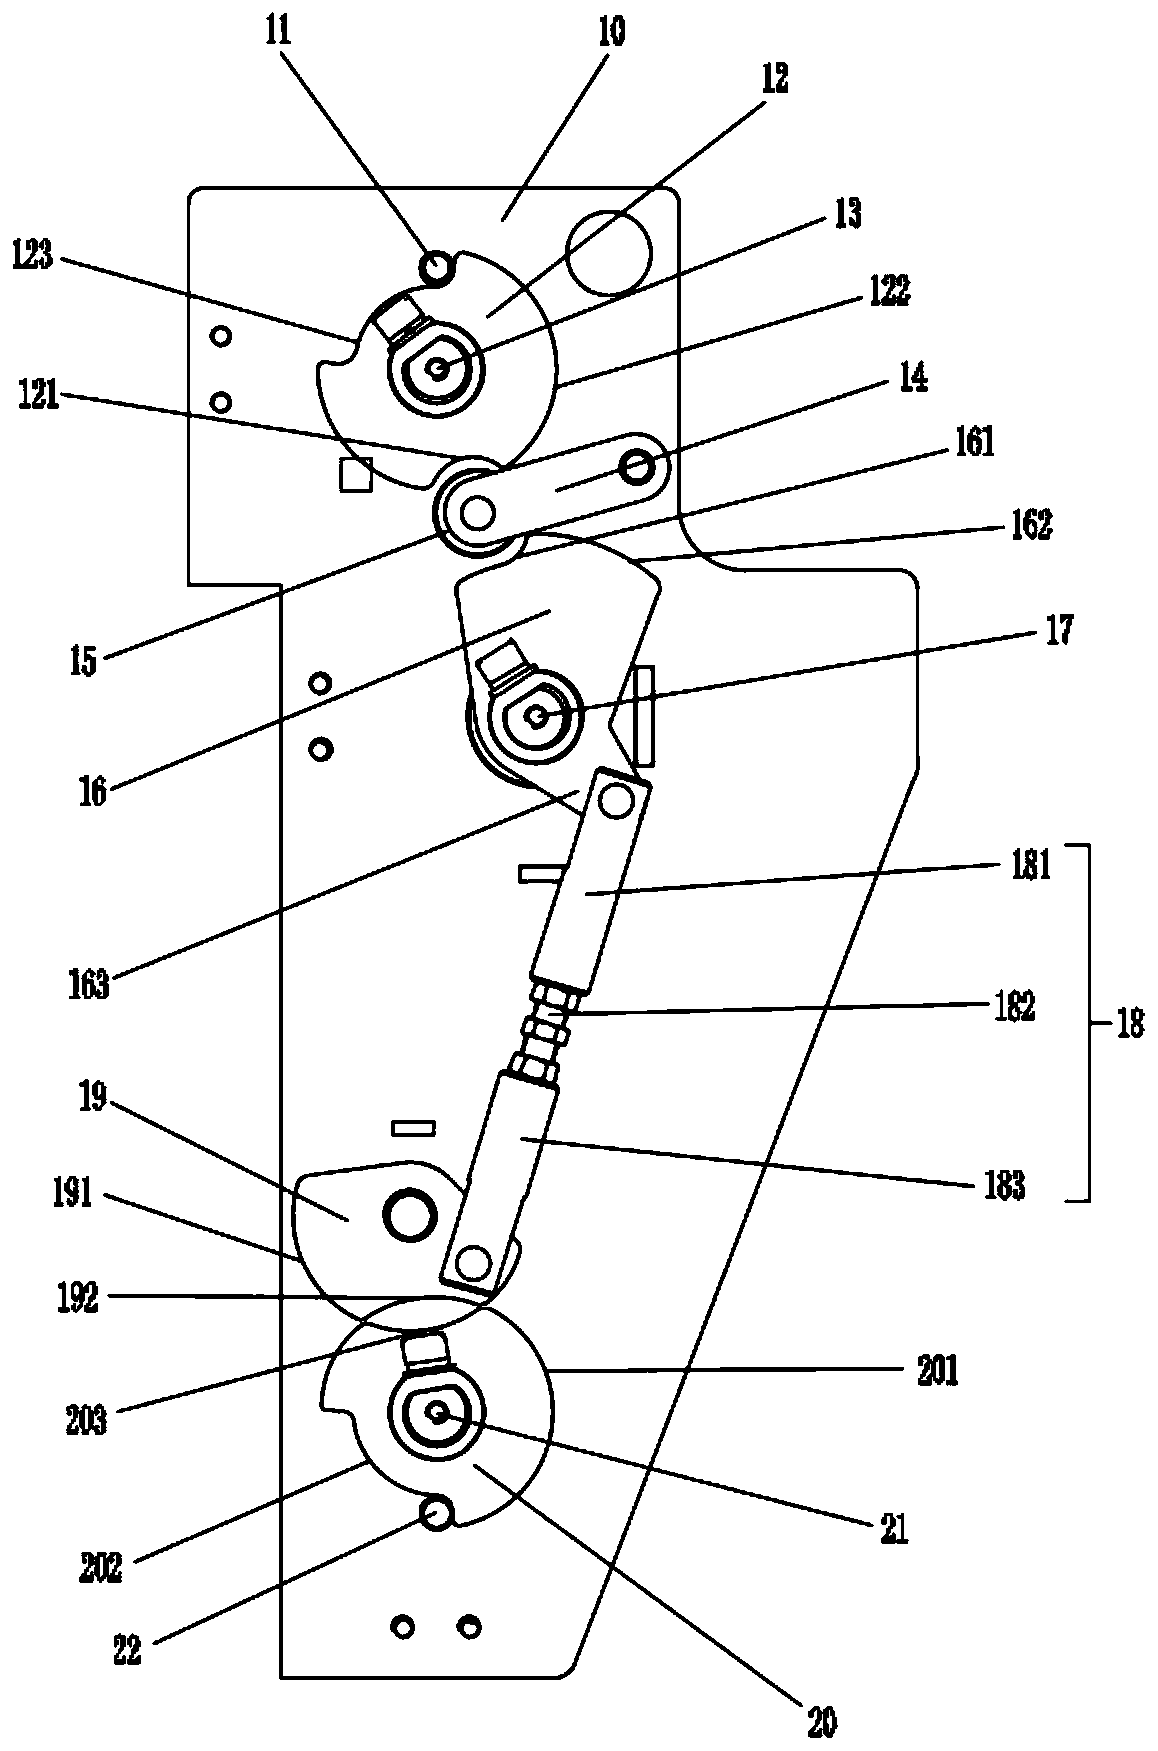 Vacuum cabinet rear forced interlocking mechanism